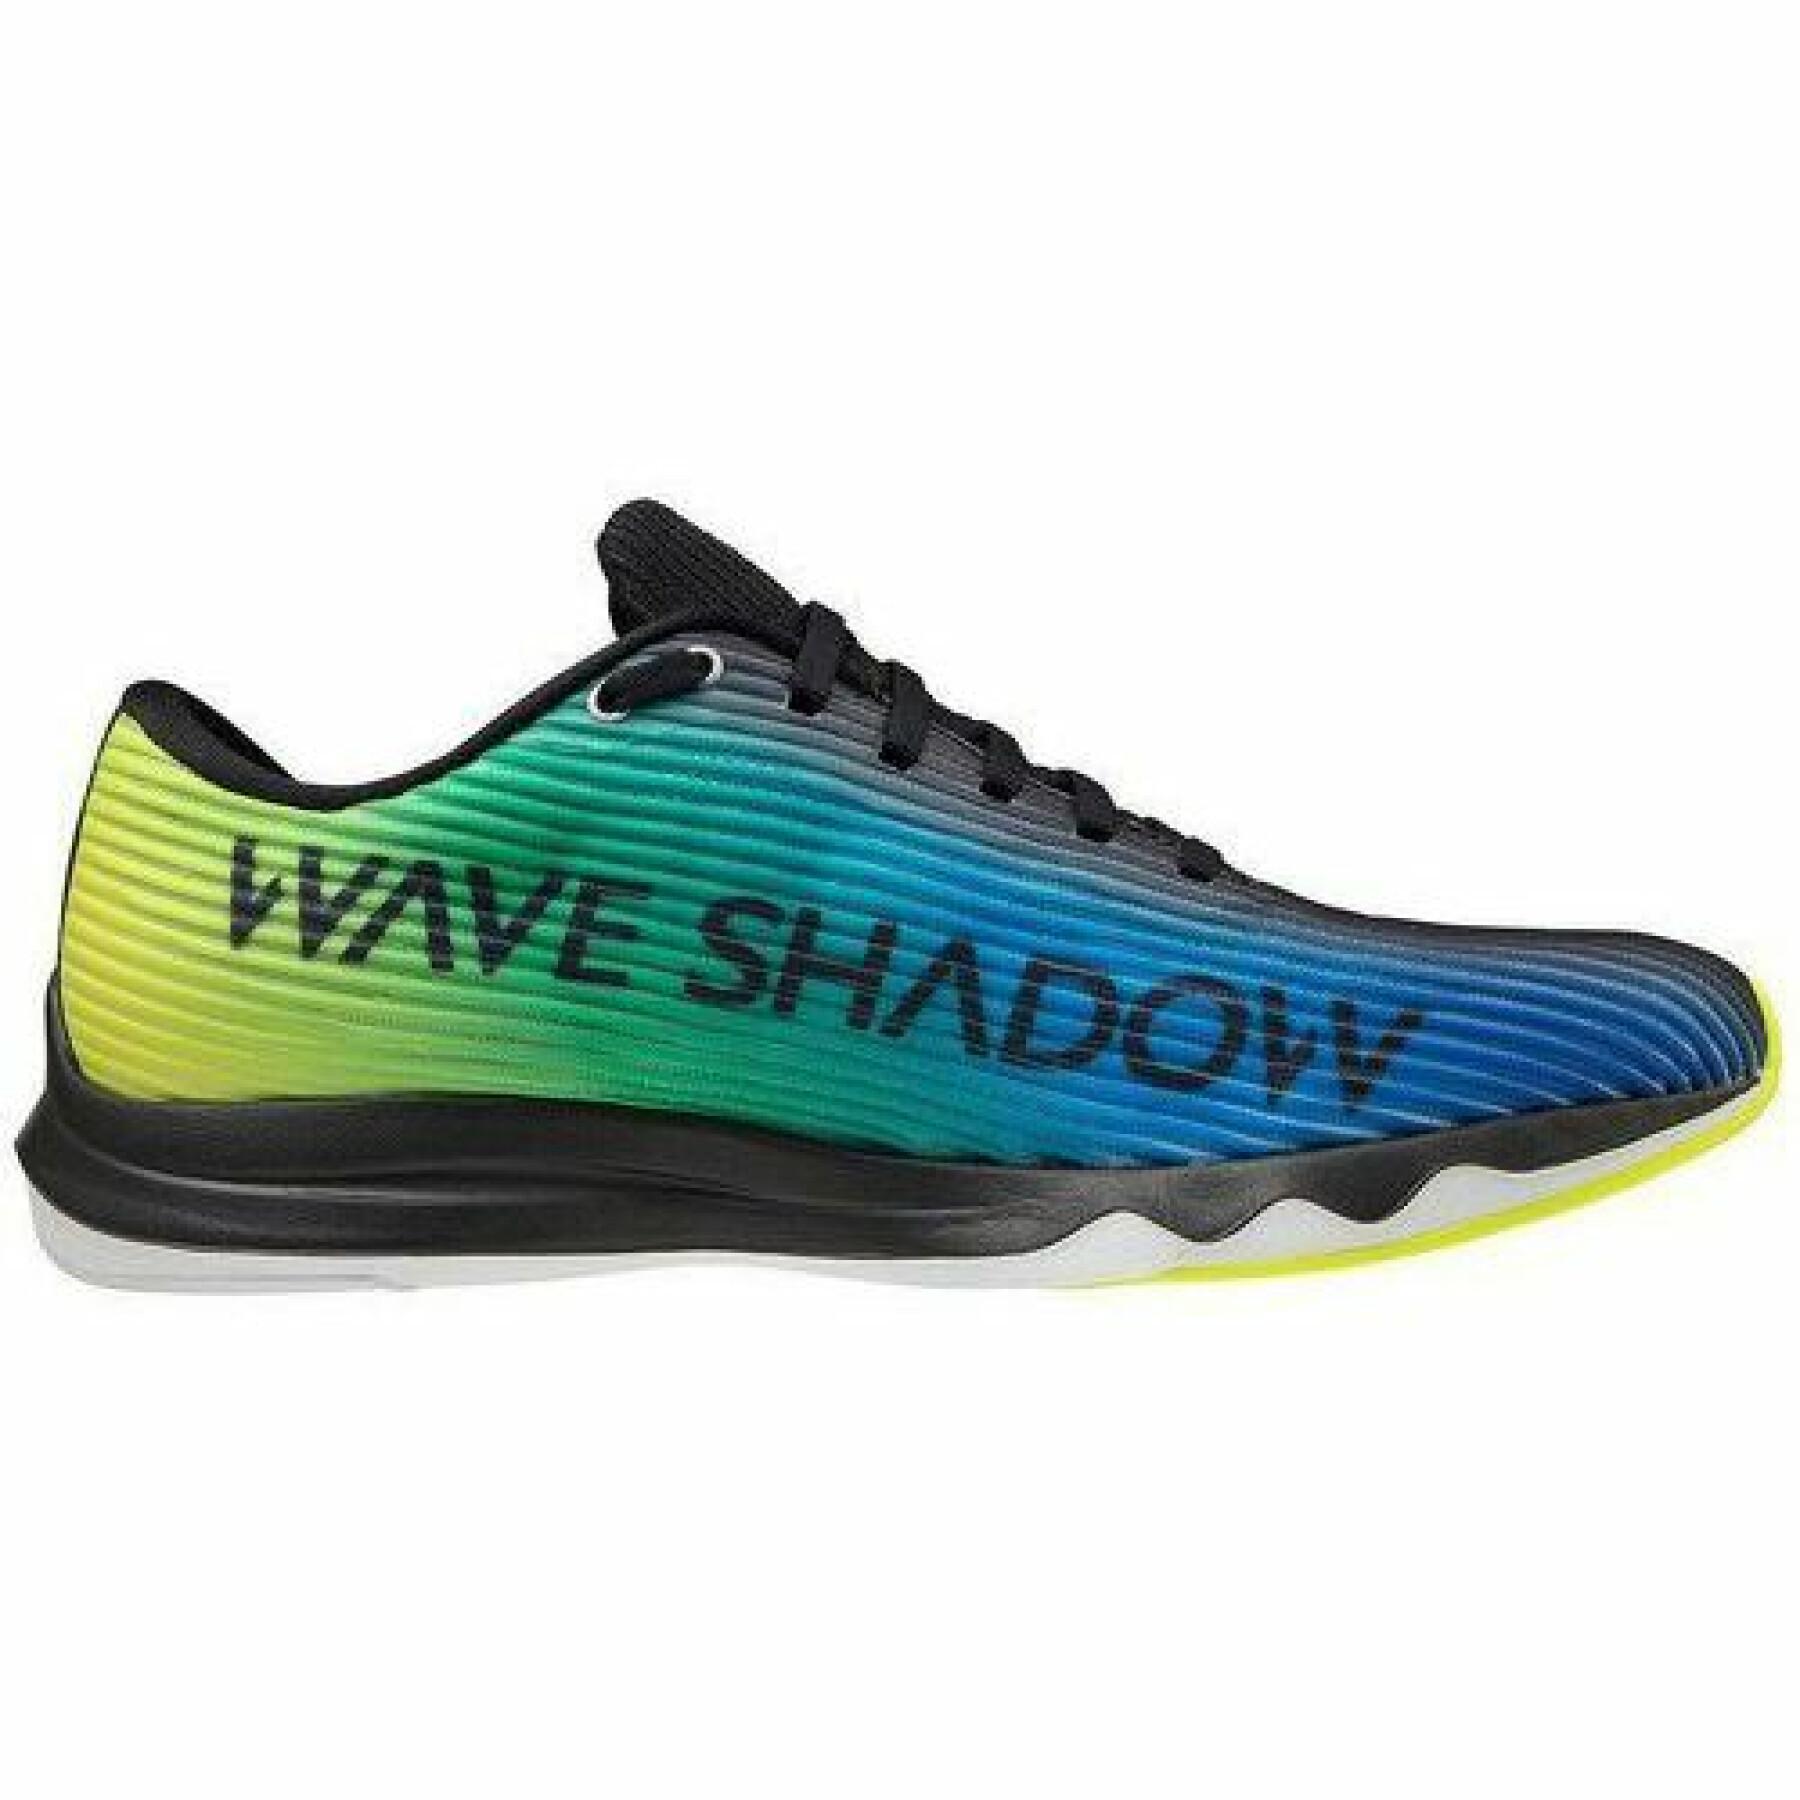 Chaussures de running Mizuno wave shadow 4